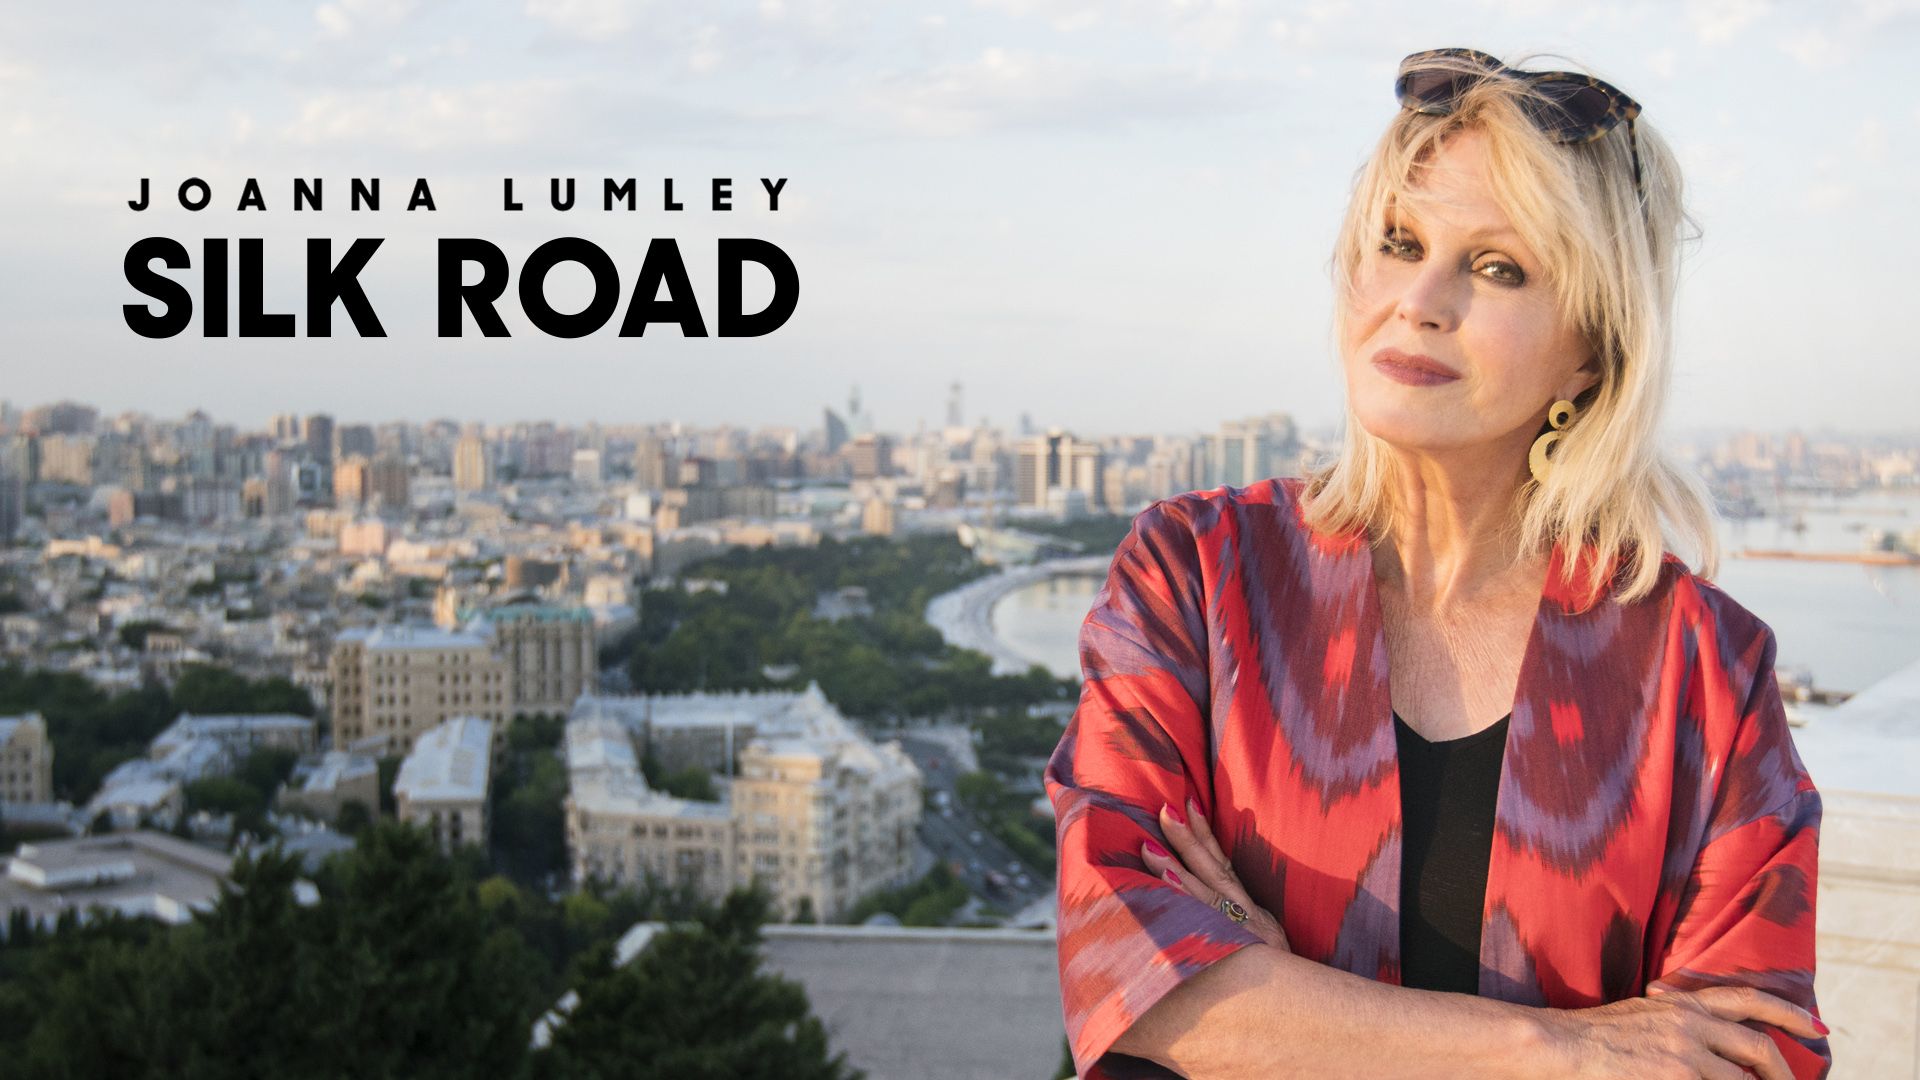 Joanna Lumley's Silk Road